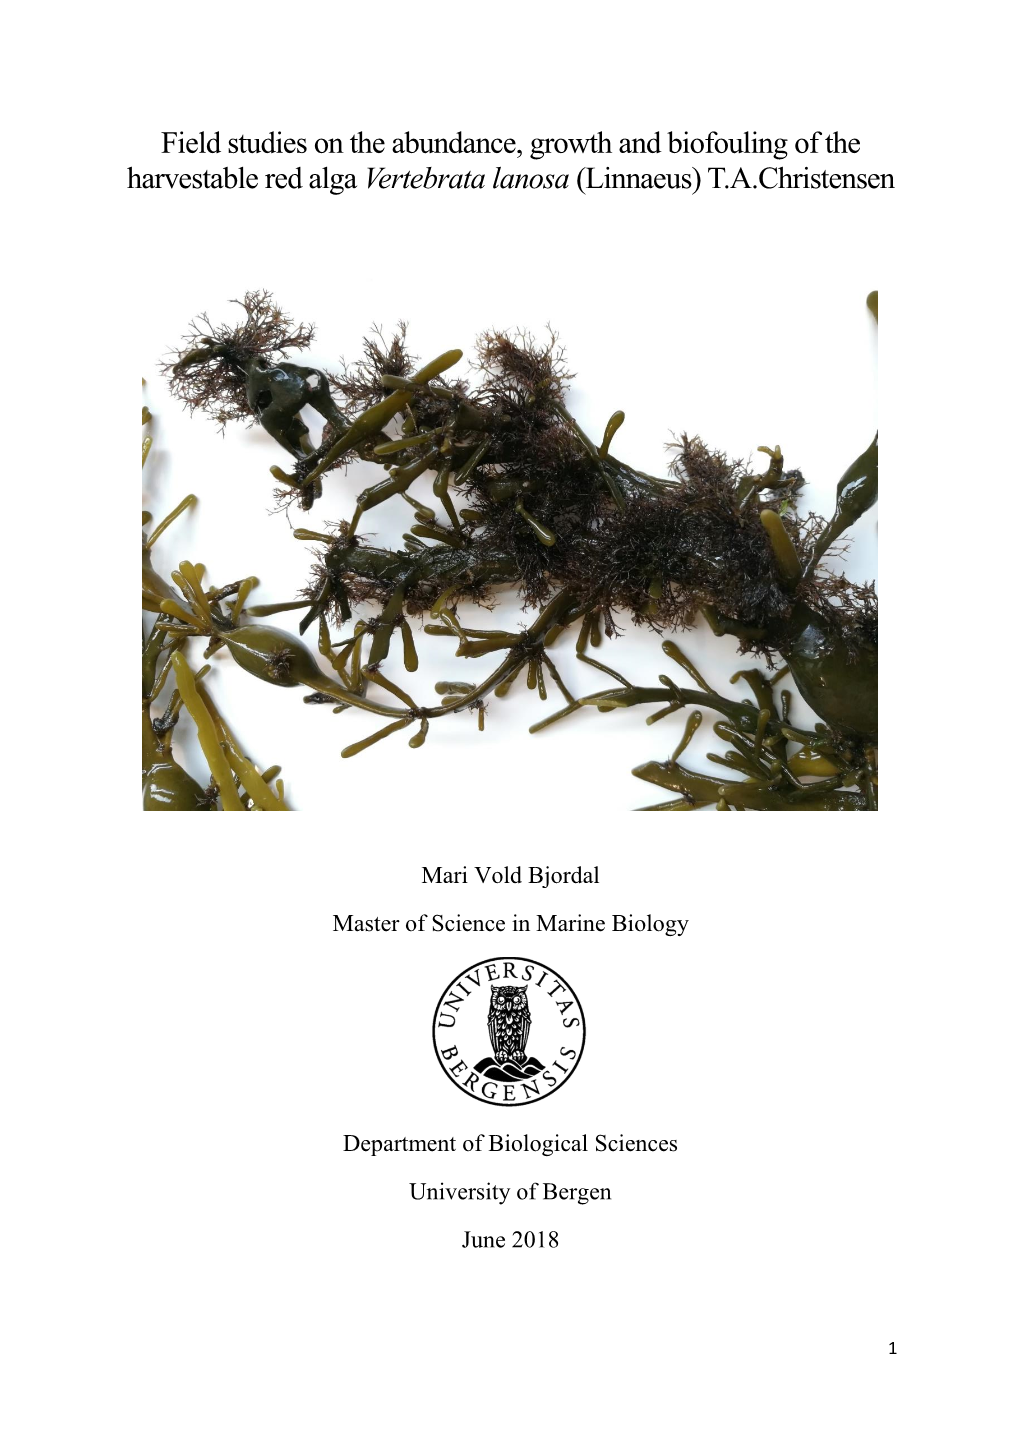 Field Studies on the Abundance, Growth and Biofouling of the Harvestable Red Alga Vertebrata Lanosa (Linnaeus) T.A.Christensen